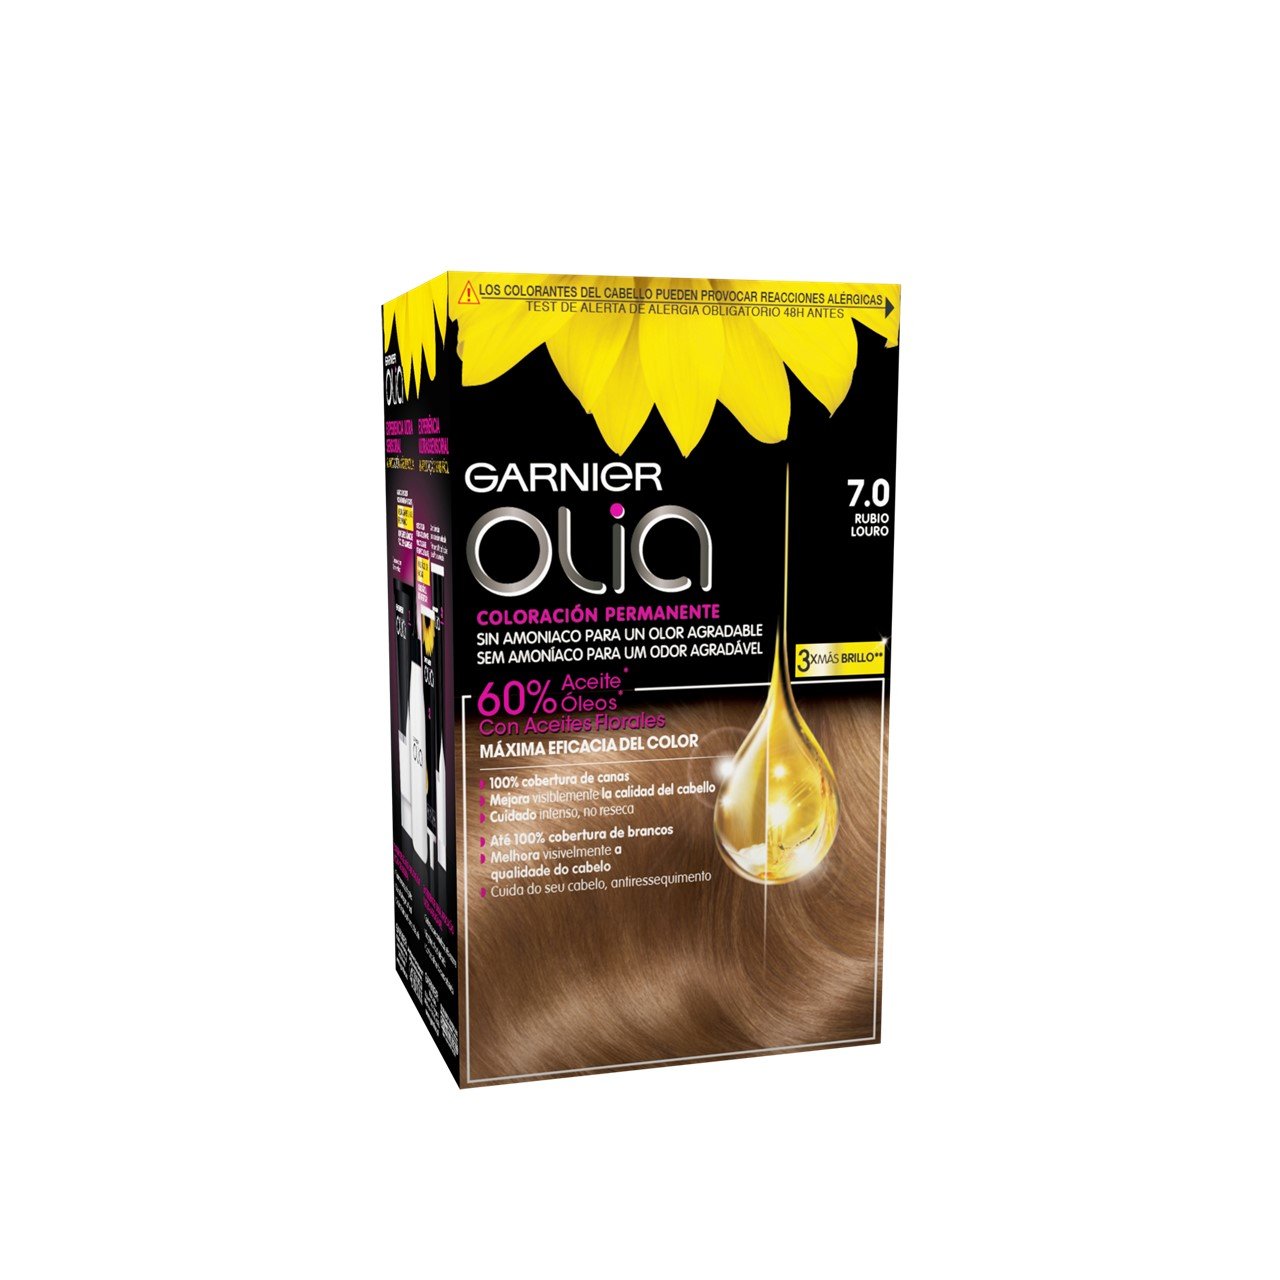 Garnier Olia 7.0 Permanent Hair Dye